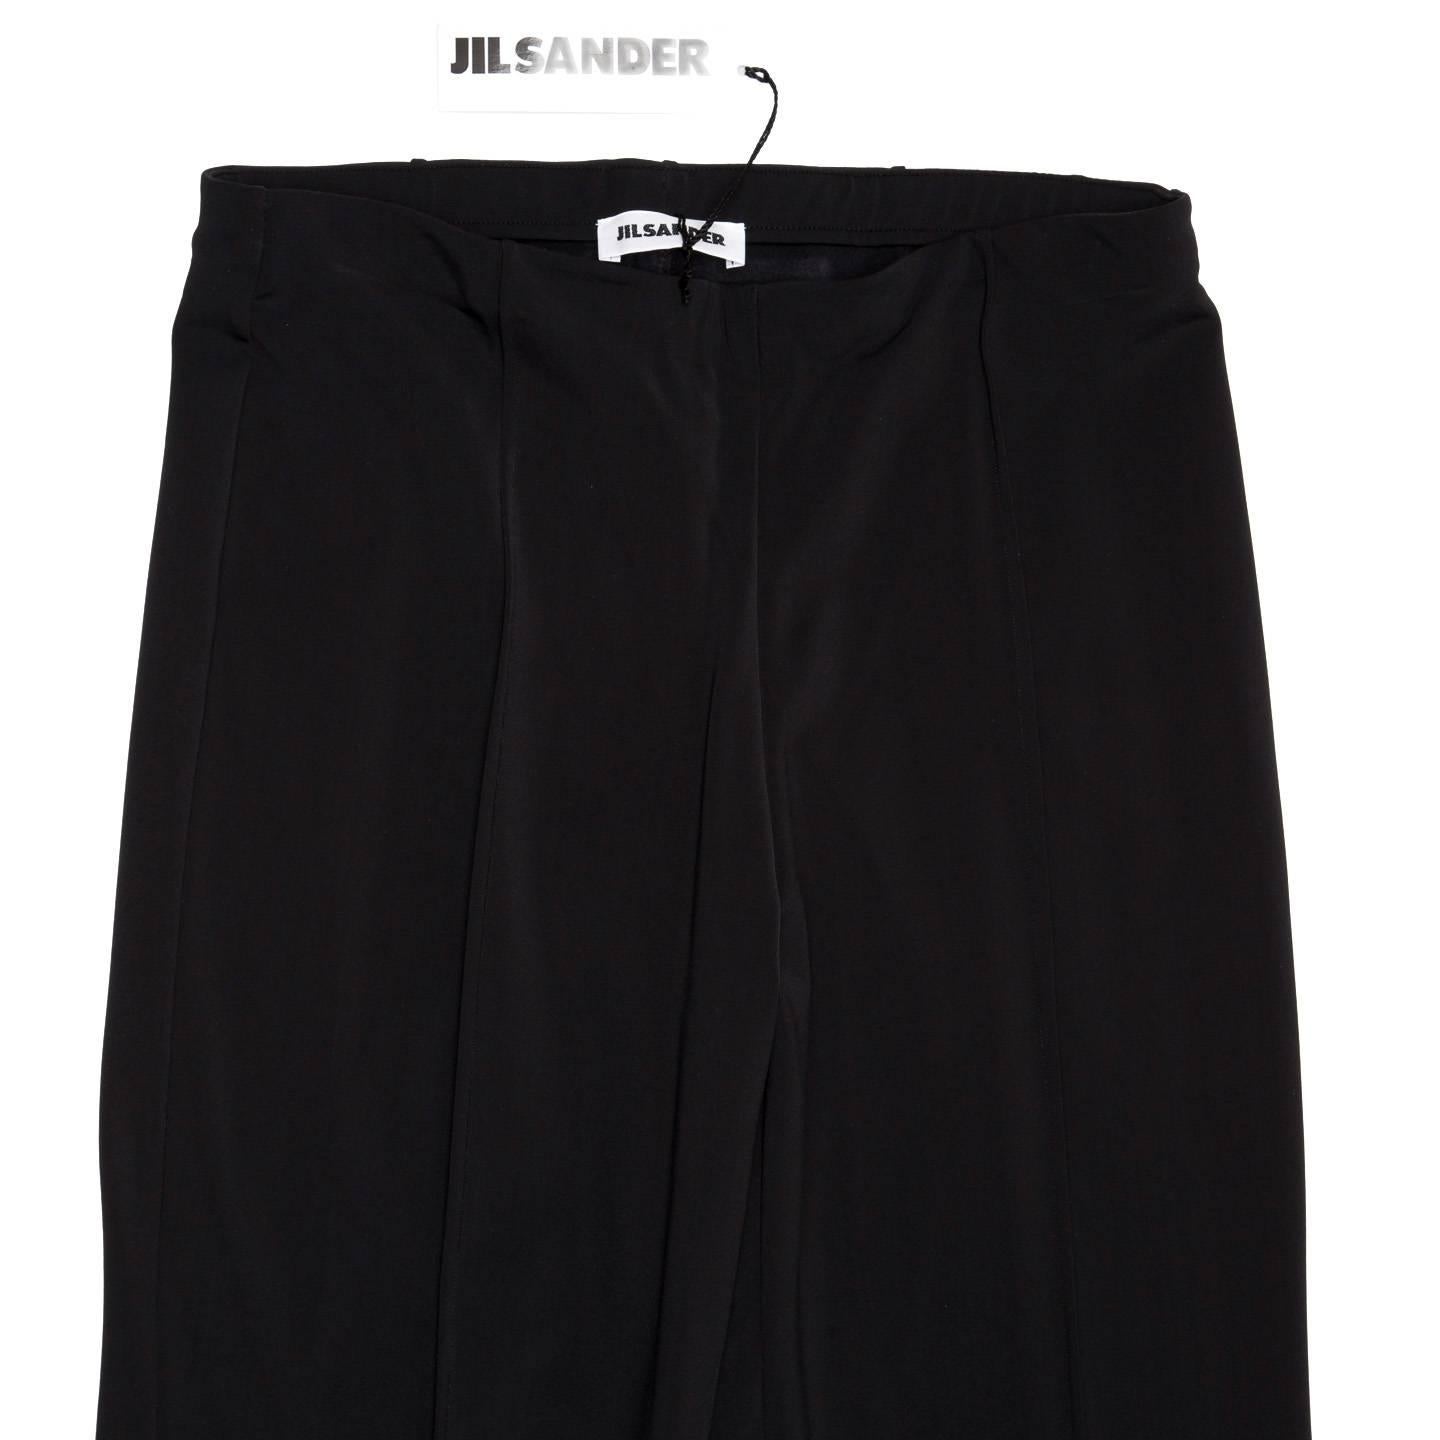 Jil Sander Black Stretch Trousers For Sale 2